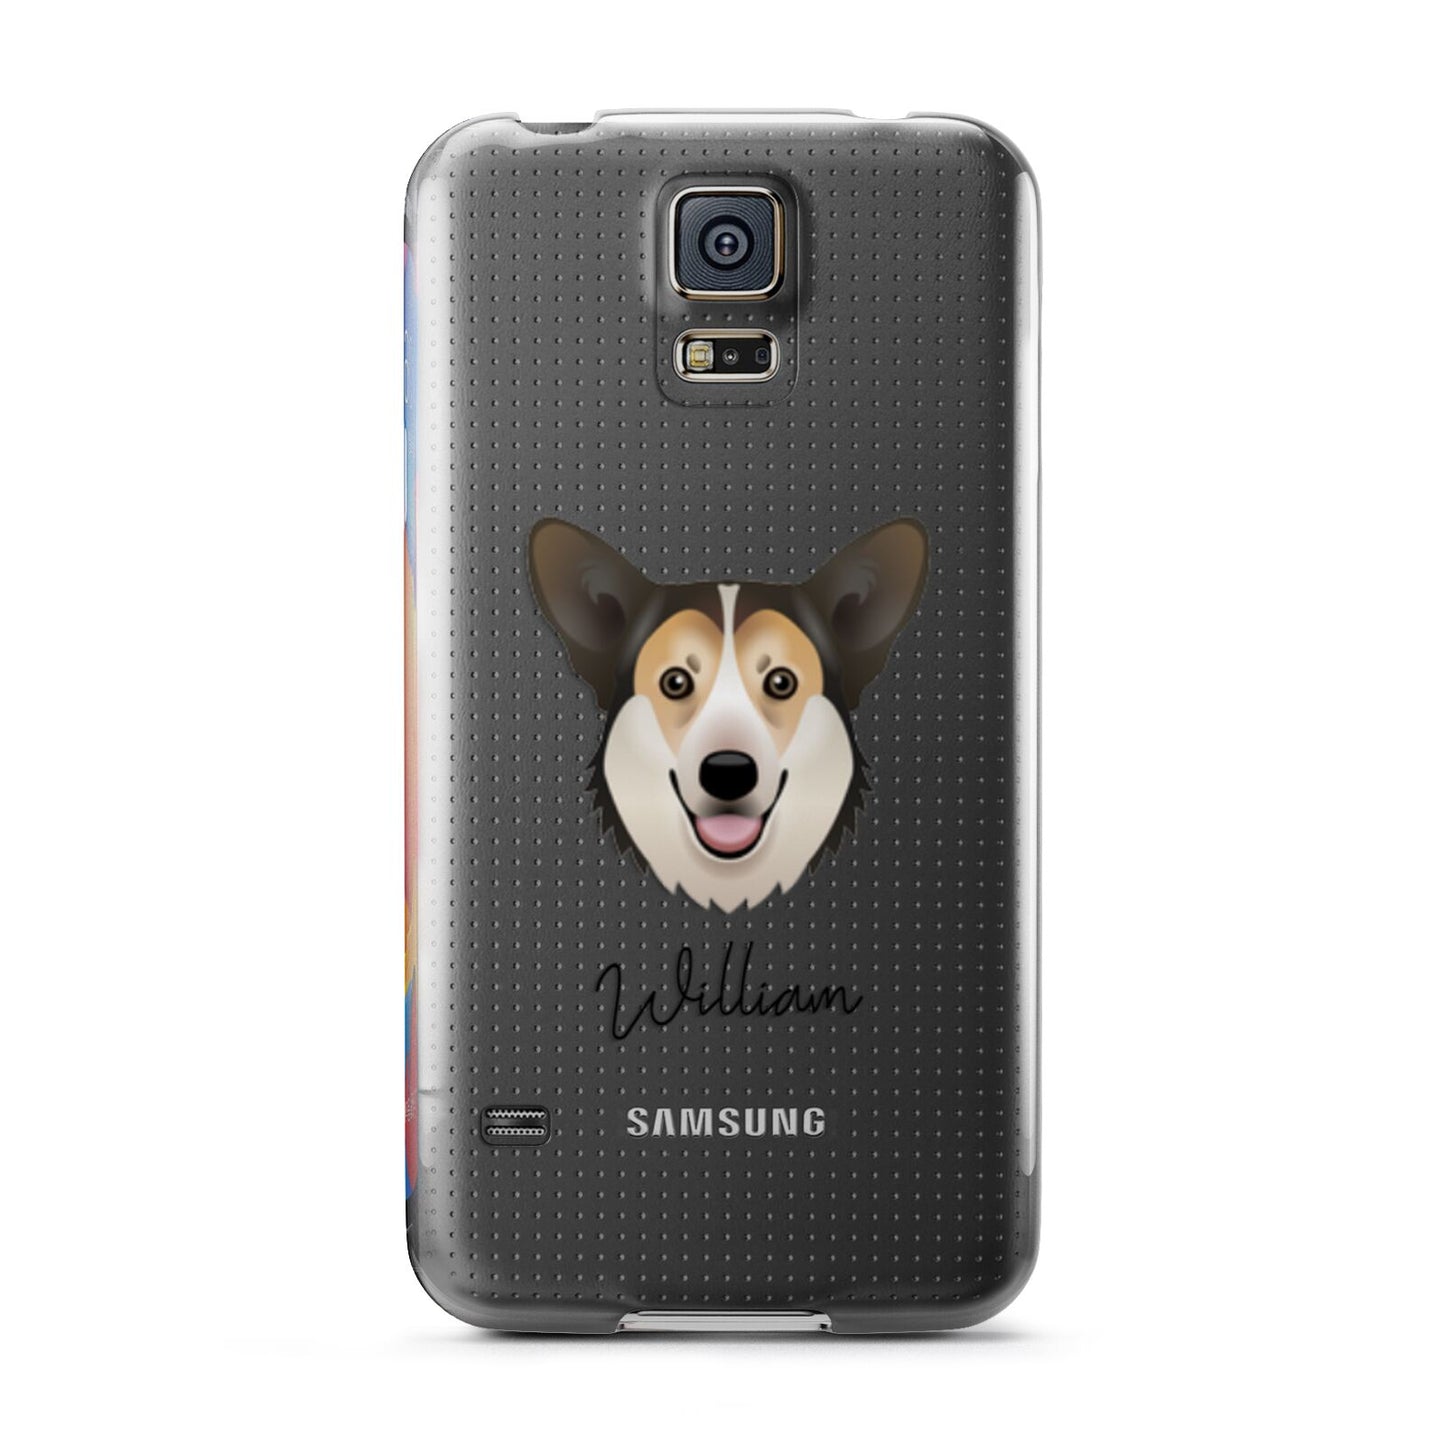 Pembroke Welsh Corgi Personalised Samsung Galaxy S5 Case